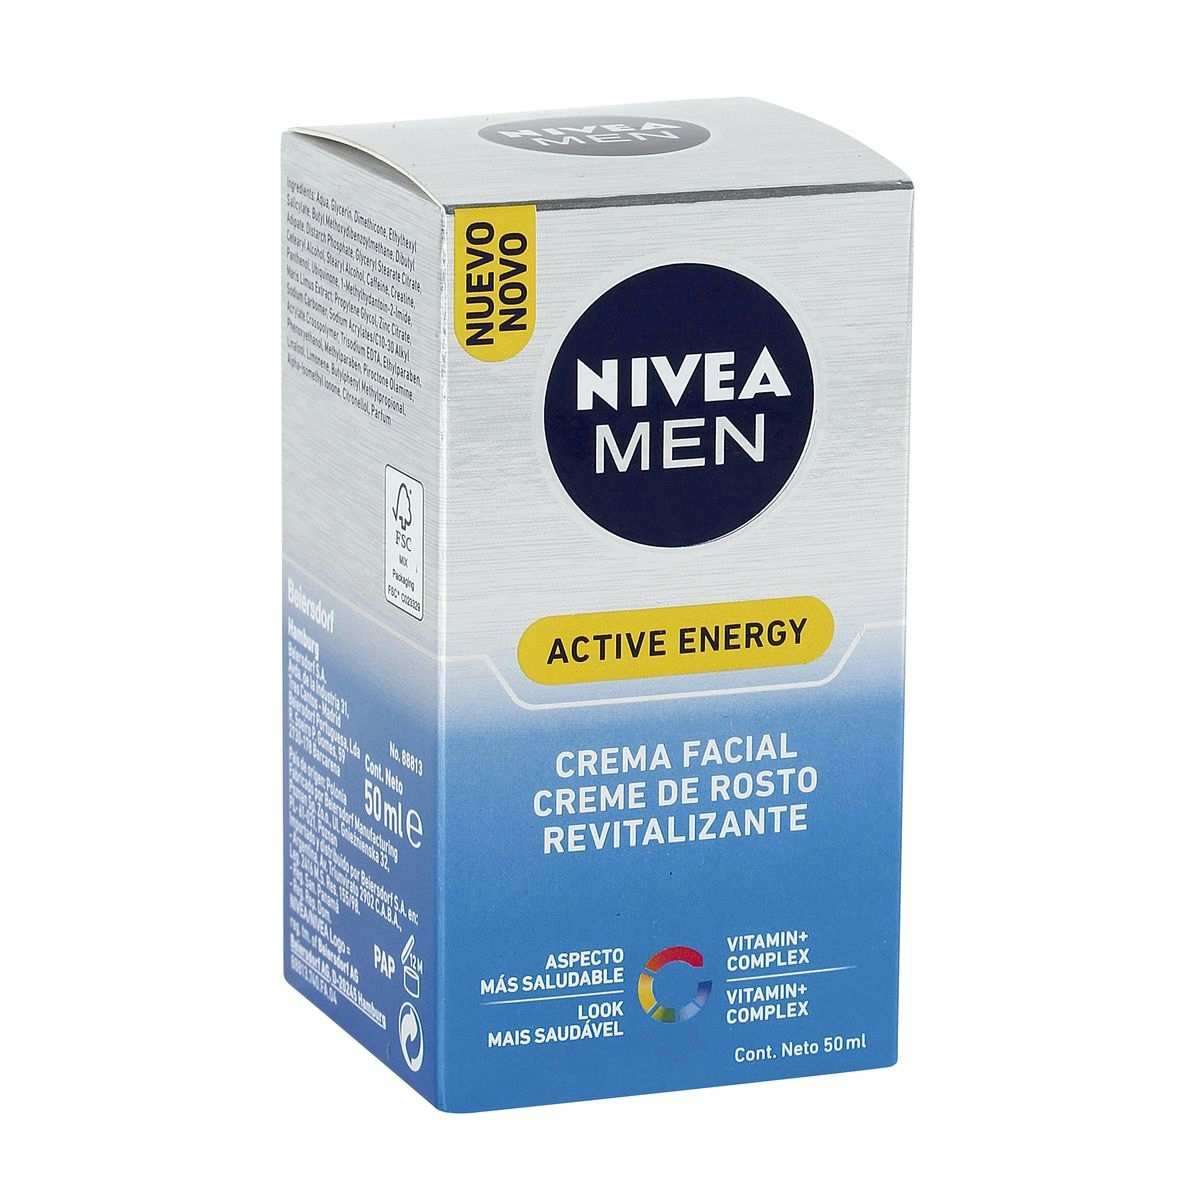 Crema facial NIVEA Men revitalizante caja 50 ml